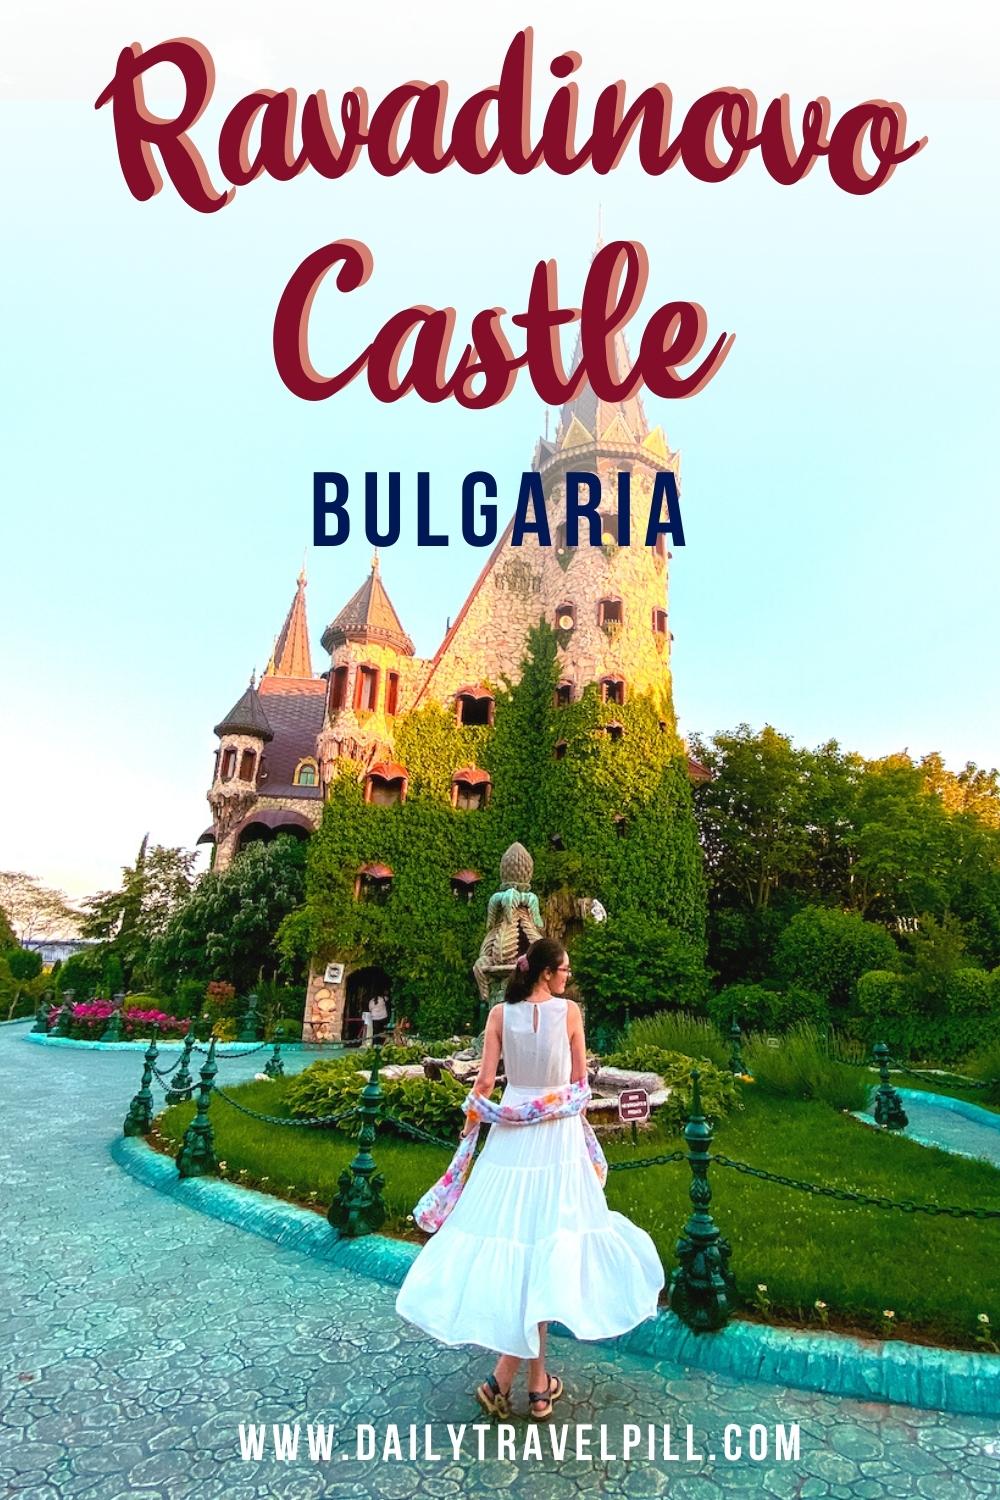 ravadinovo castle bulgaria, most beautiful castle in bulgaria, bulgaria castle